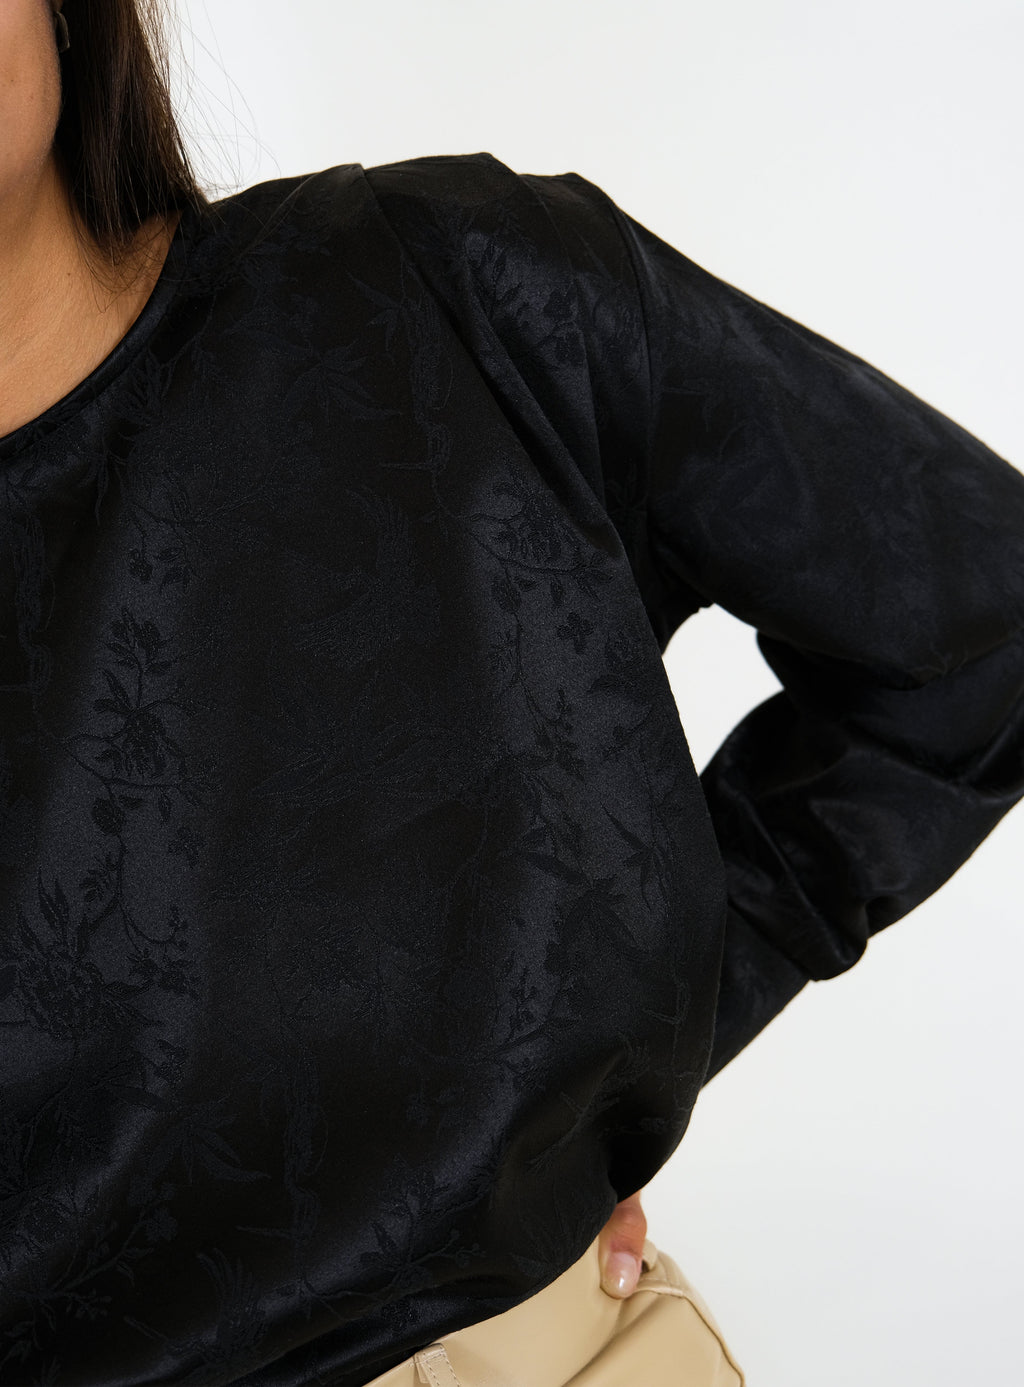 blouse damask black